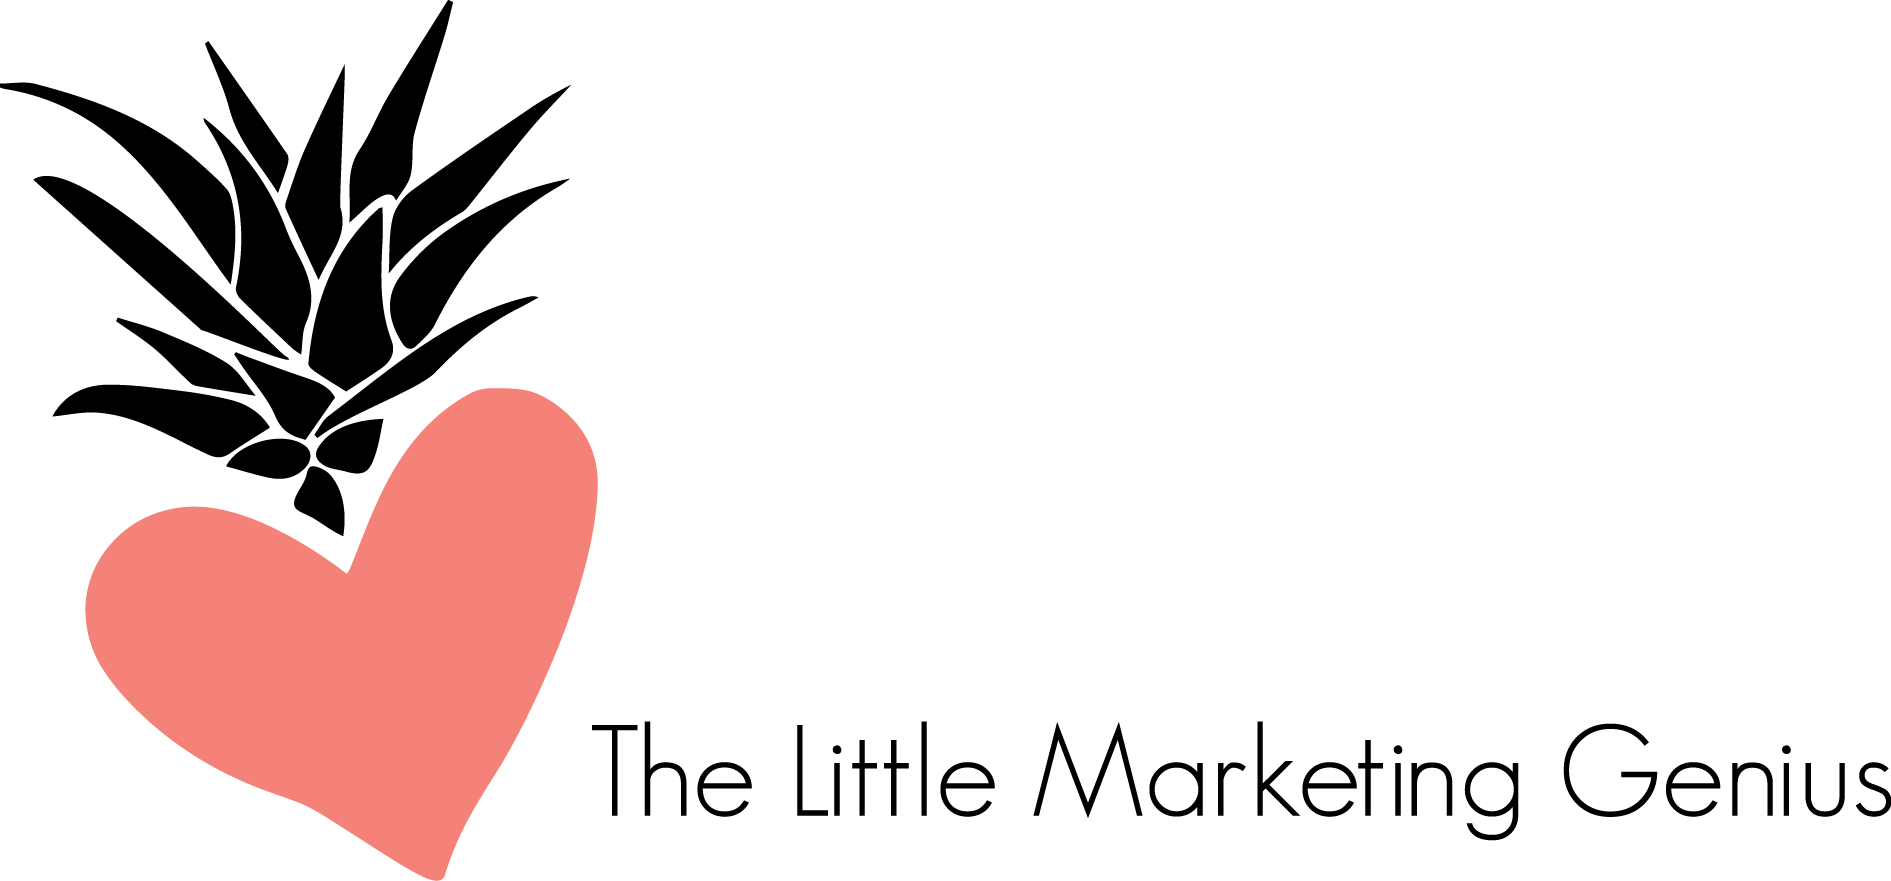 The Little Marketing Genius